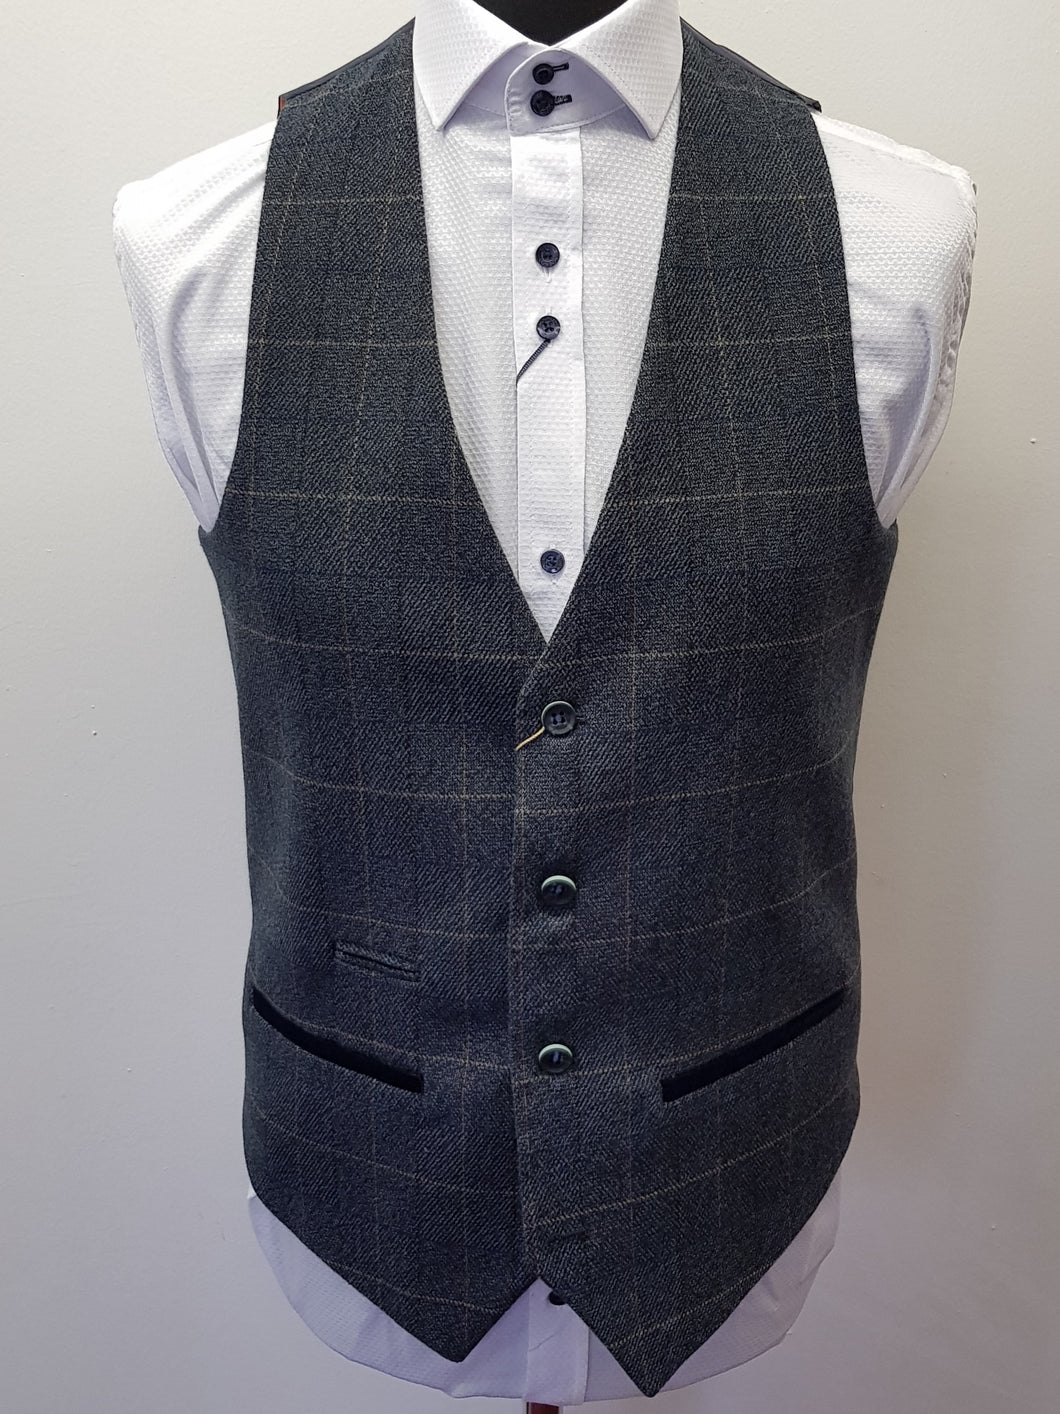 Marc Darcy Scott Blue Tweed Waistcoat worn with textured white shirt